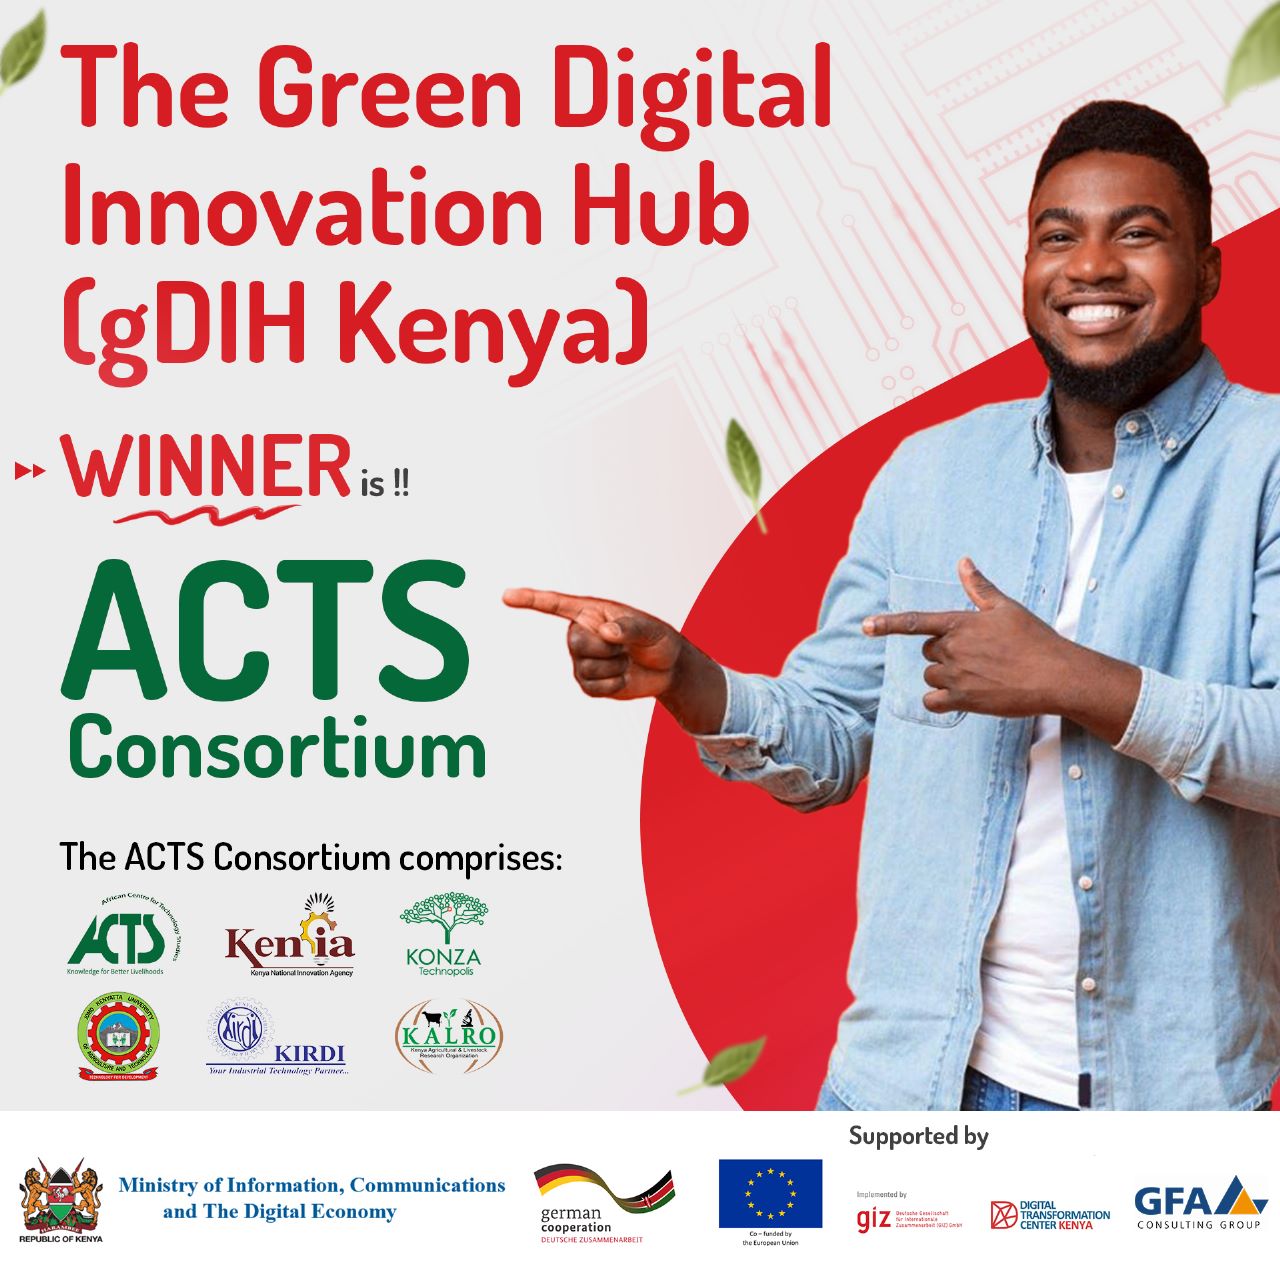 ACTS-led consortium wins bid to establish Green Digital Innovation Hub in Kenya